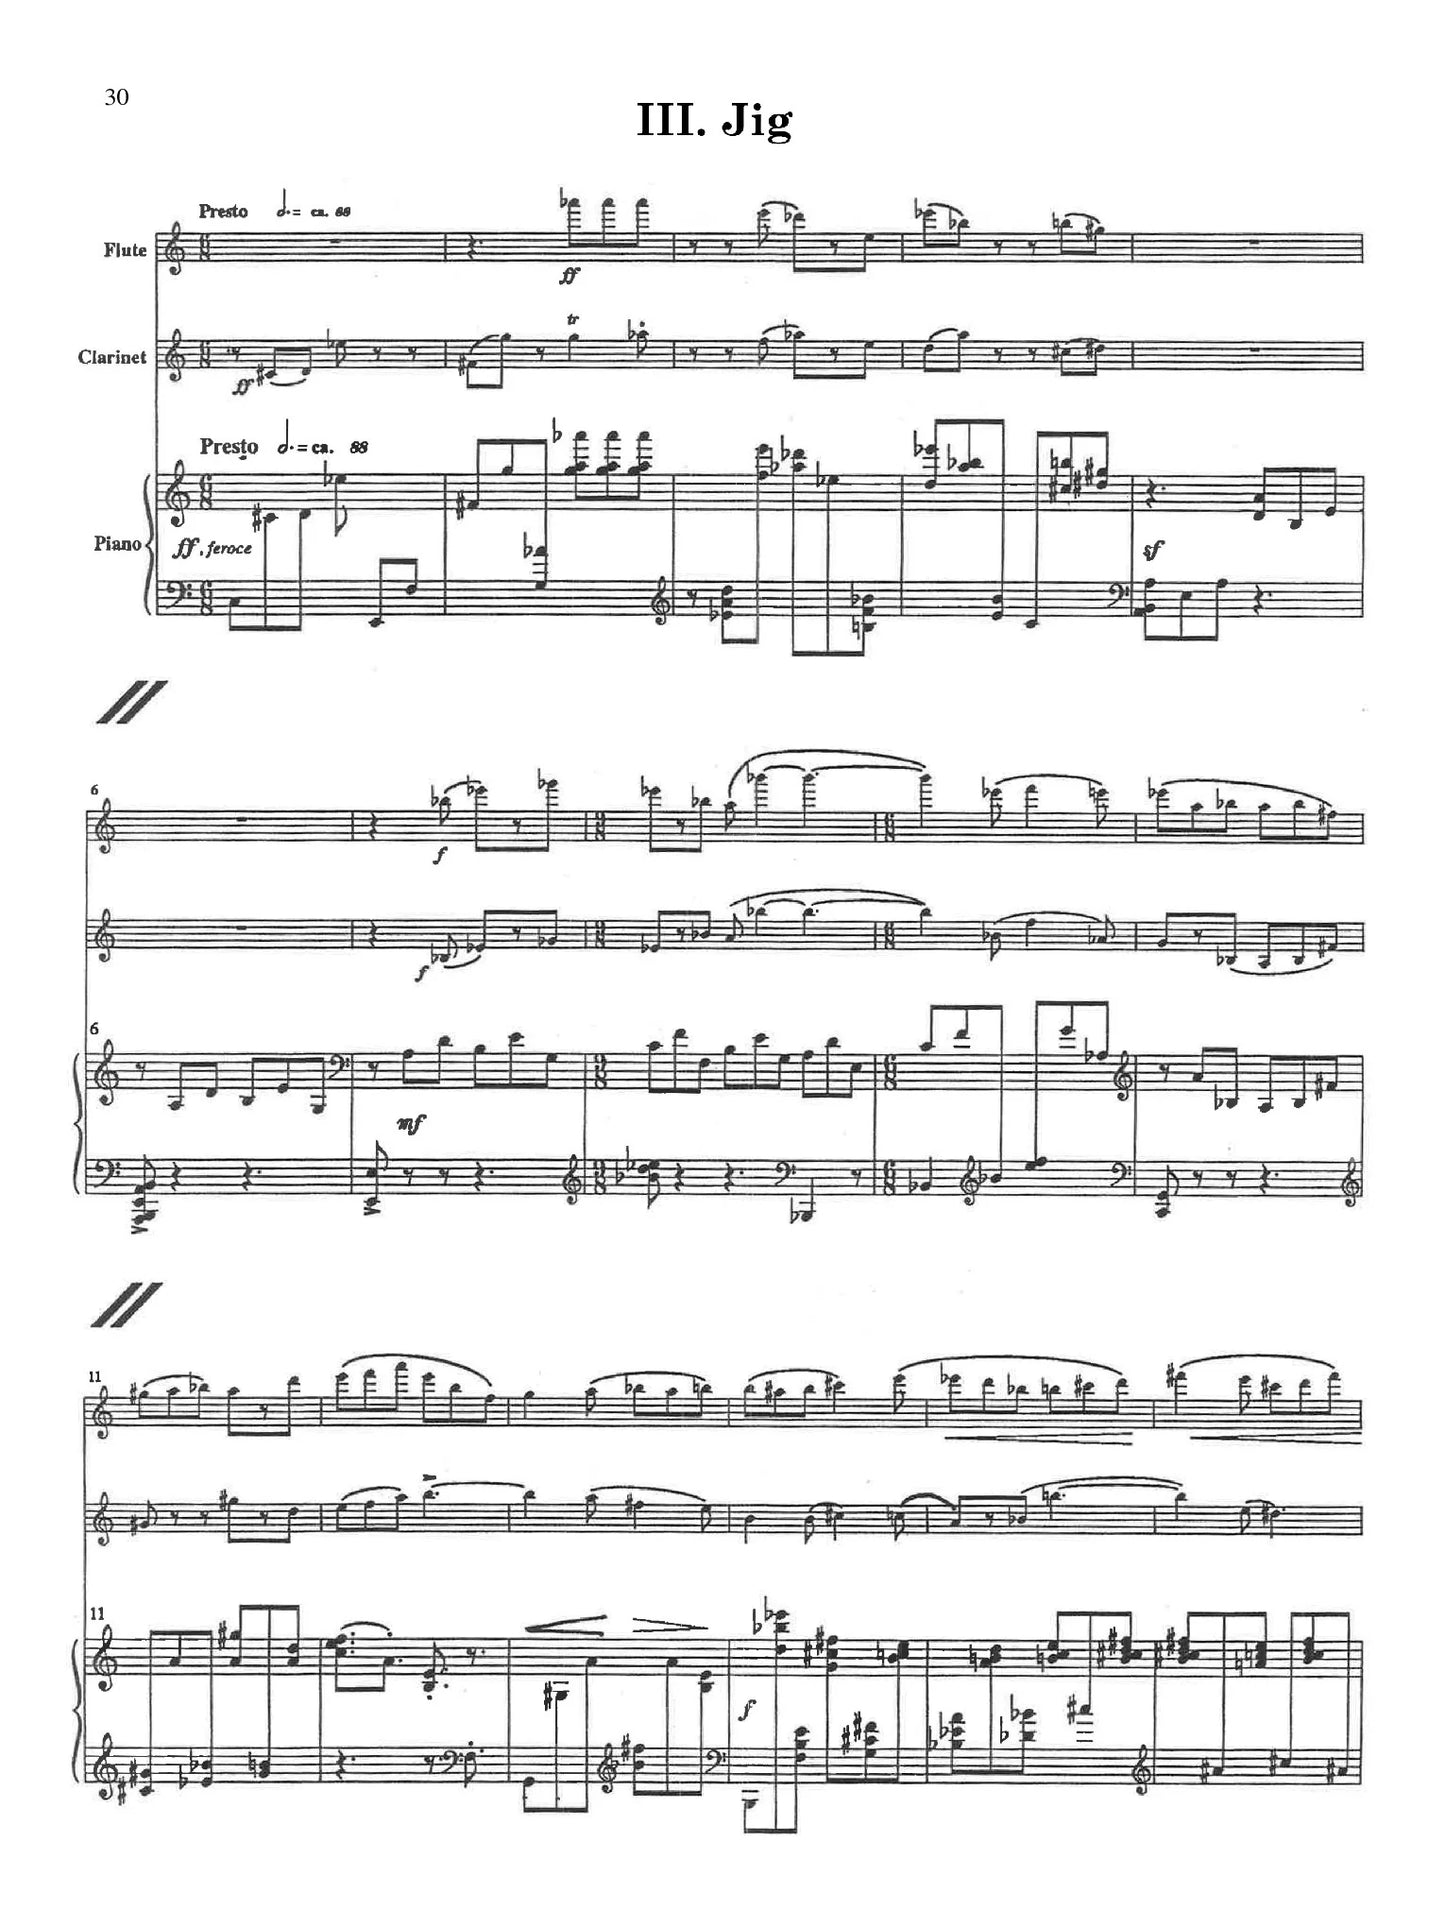 Schoenfeld - Sonatina for Flute, Clarinet and Piano